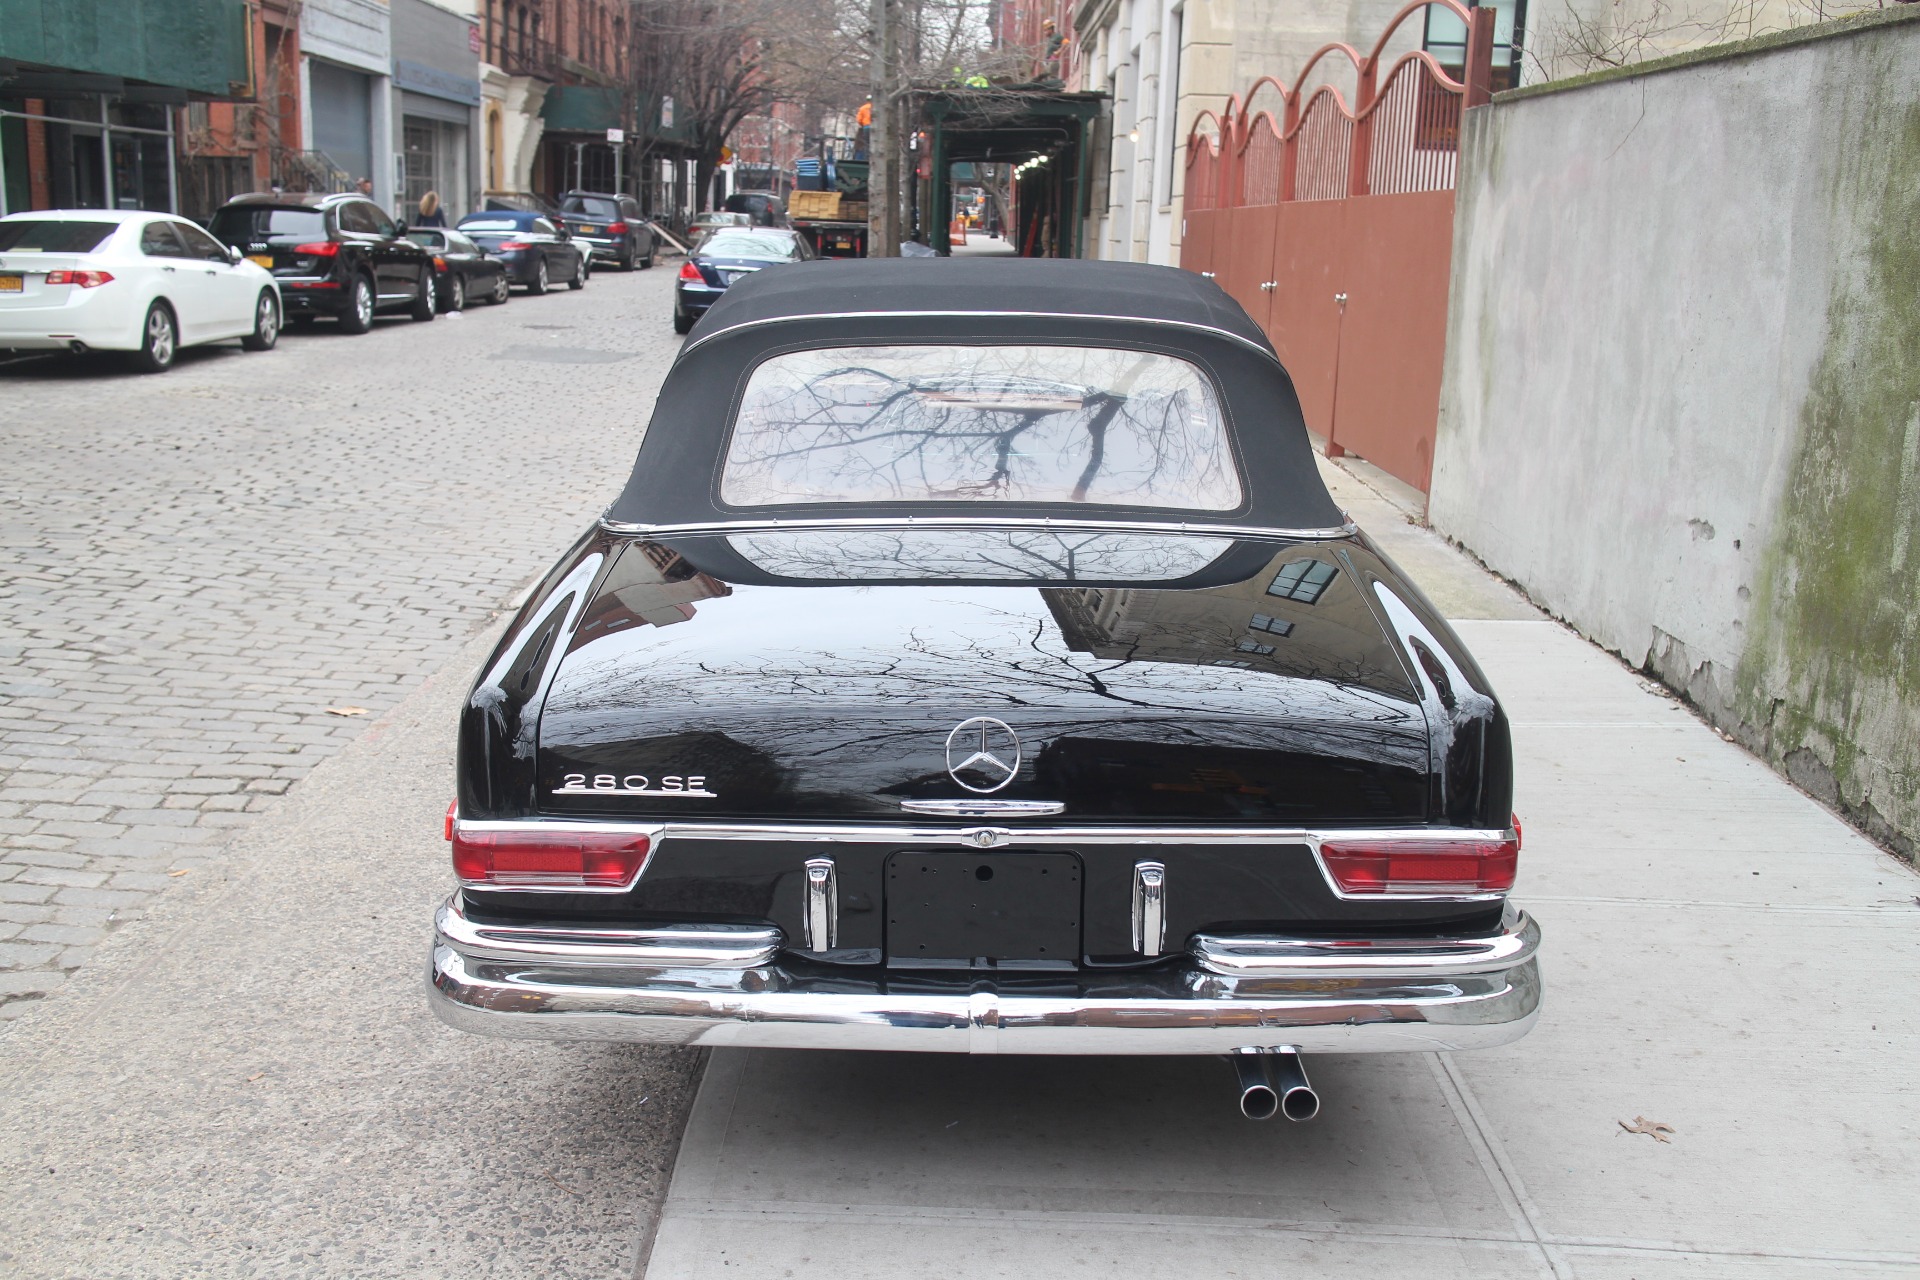  1968 Mercedes-Benz 280 SE Convertible [W111] in The  Neighbourhood: Sweater Weather, 2013